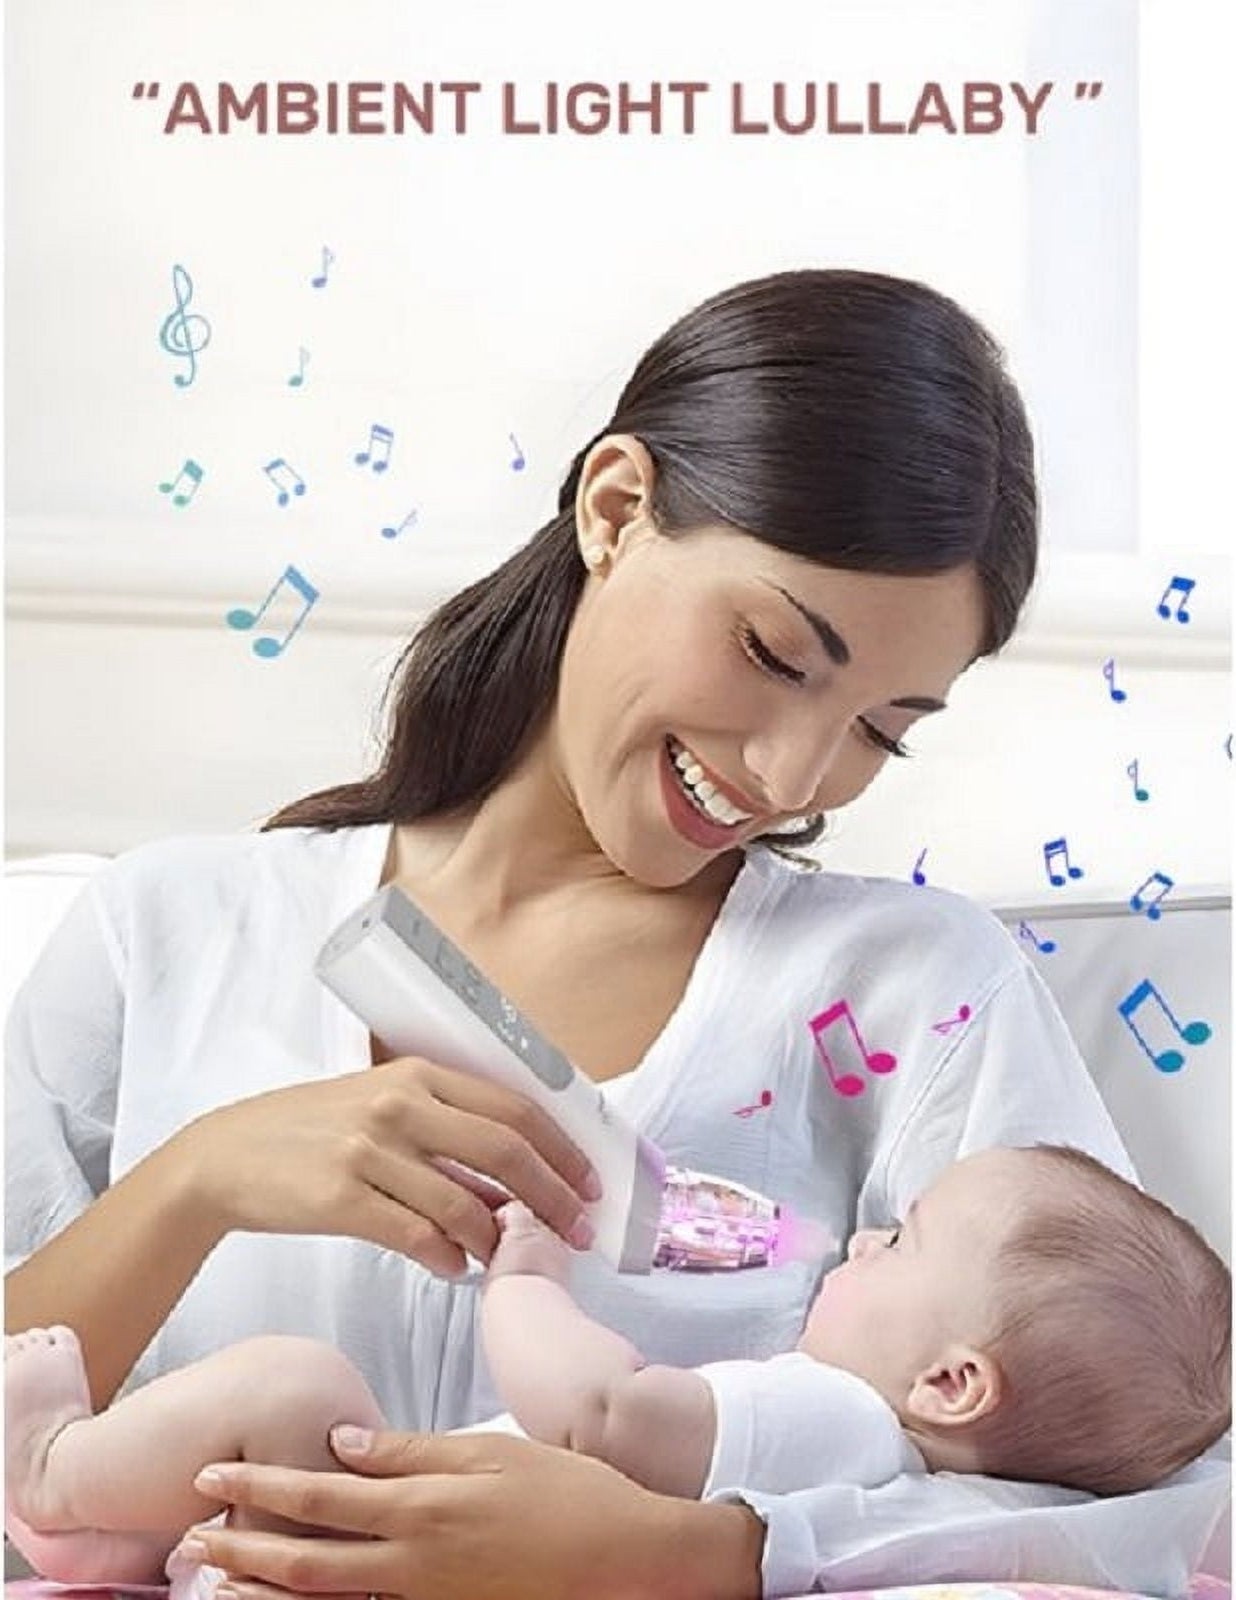 A woman uses an aspirator on a baby